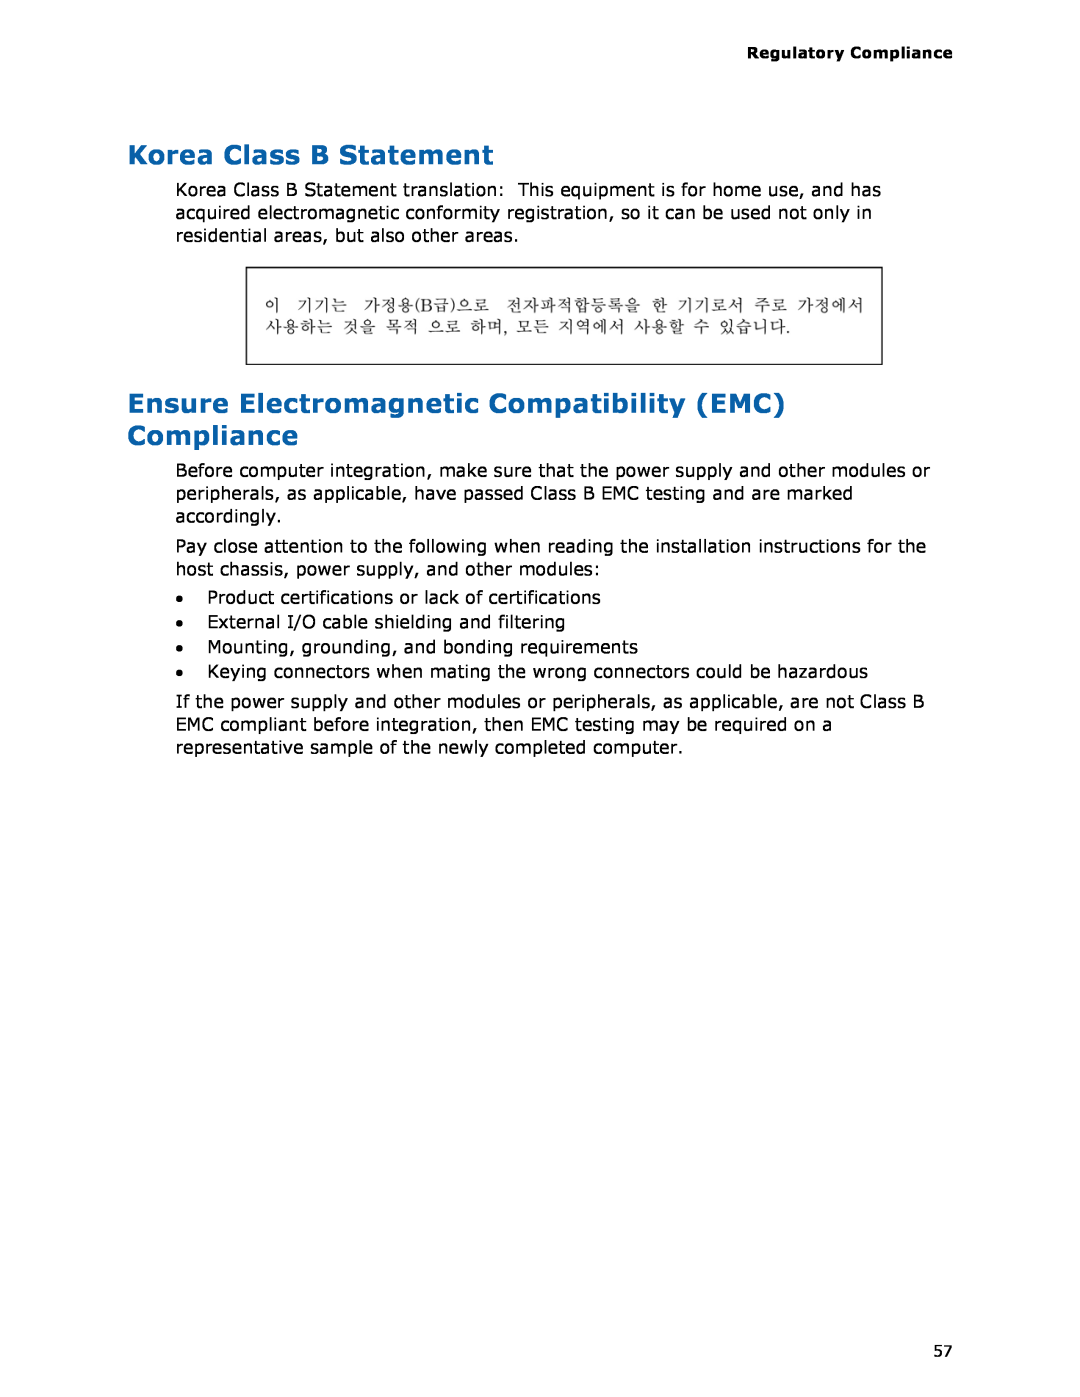 Intel D425KT manual Korea Class B Statement, Ensure Electromagnetic Compatibility EMC Compliance 